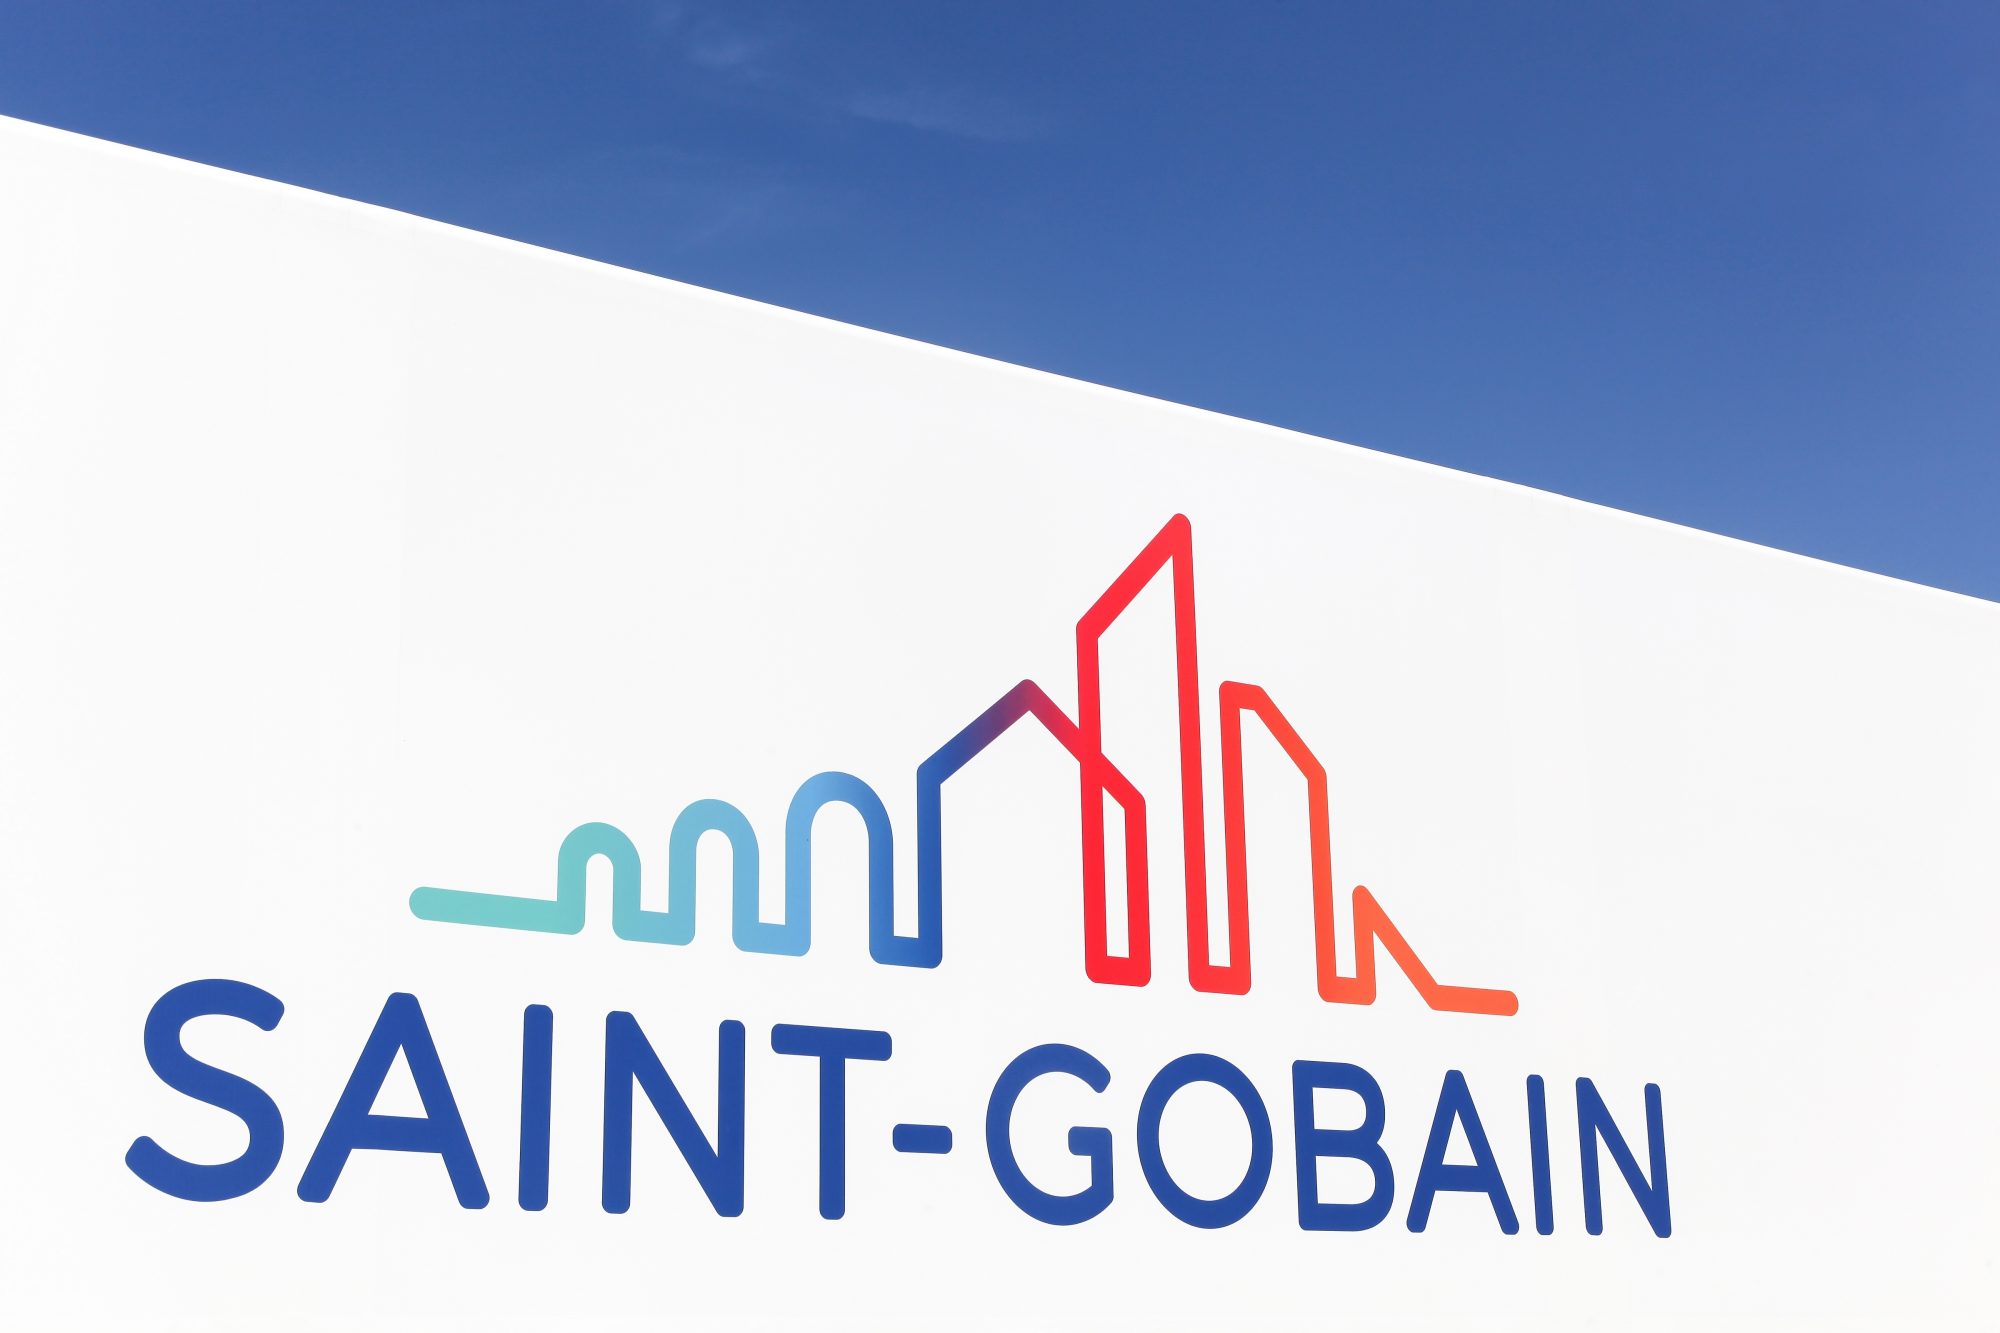 Сен гобен сайт. Сен Гобен. Saint Gobain эмблема. Новый лого сен Гобен. Saint-Gobain французская компания логотип.